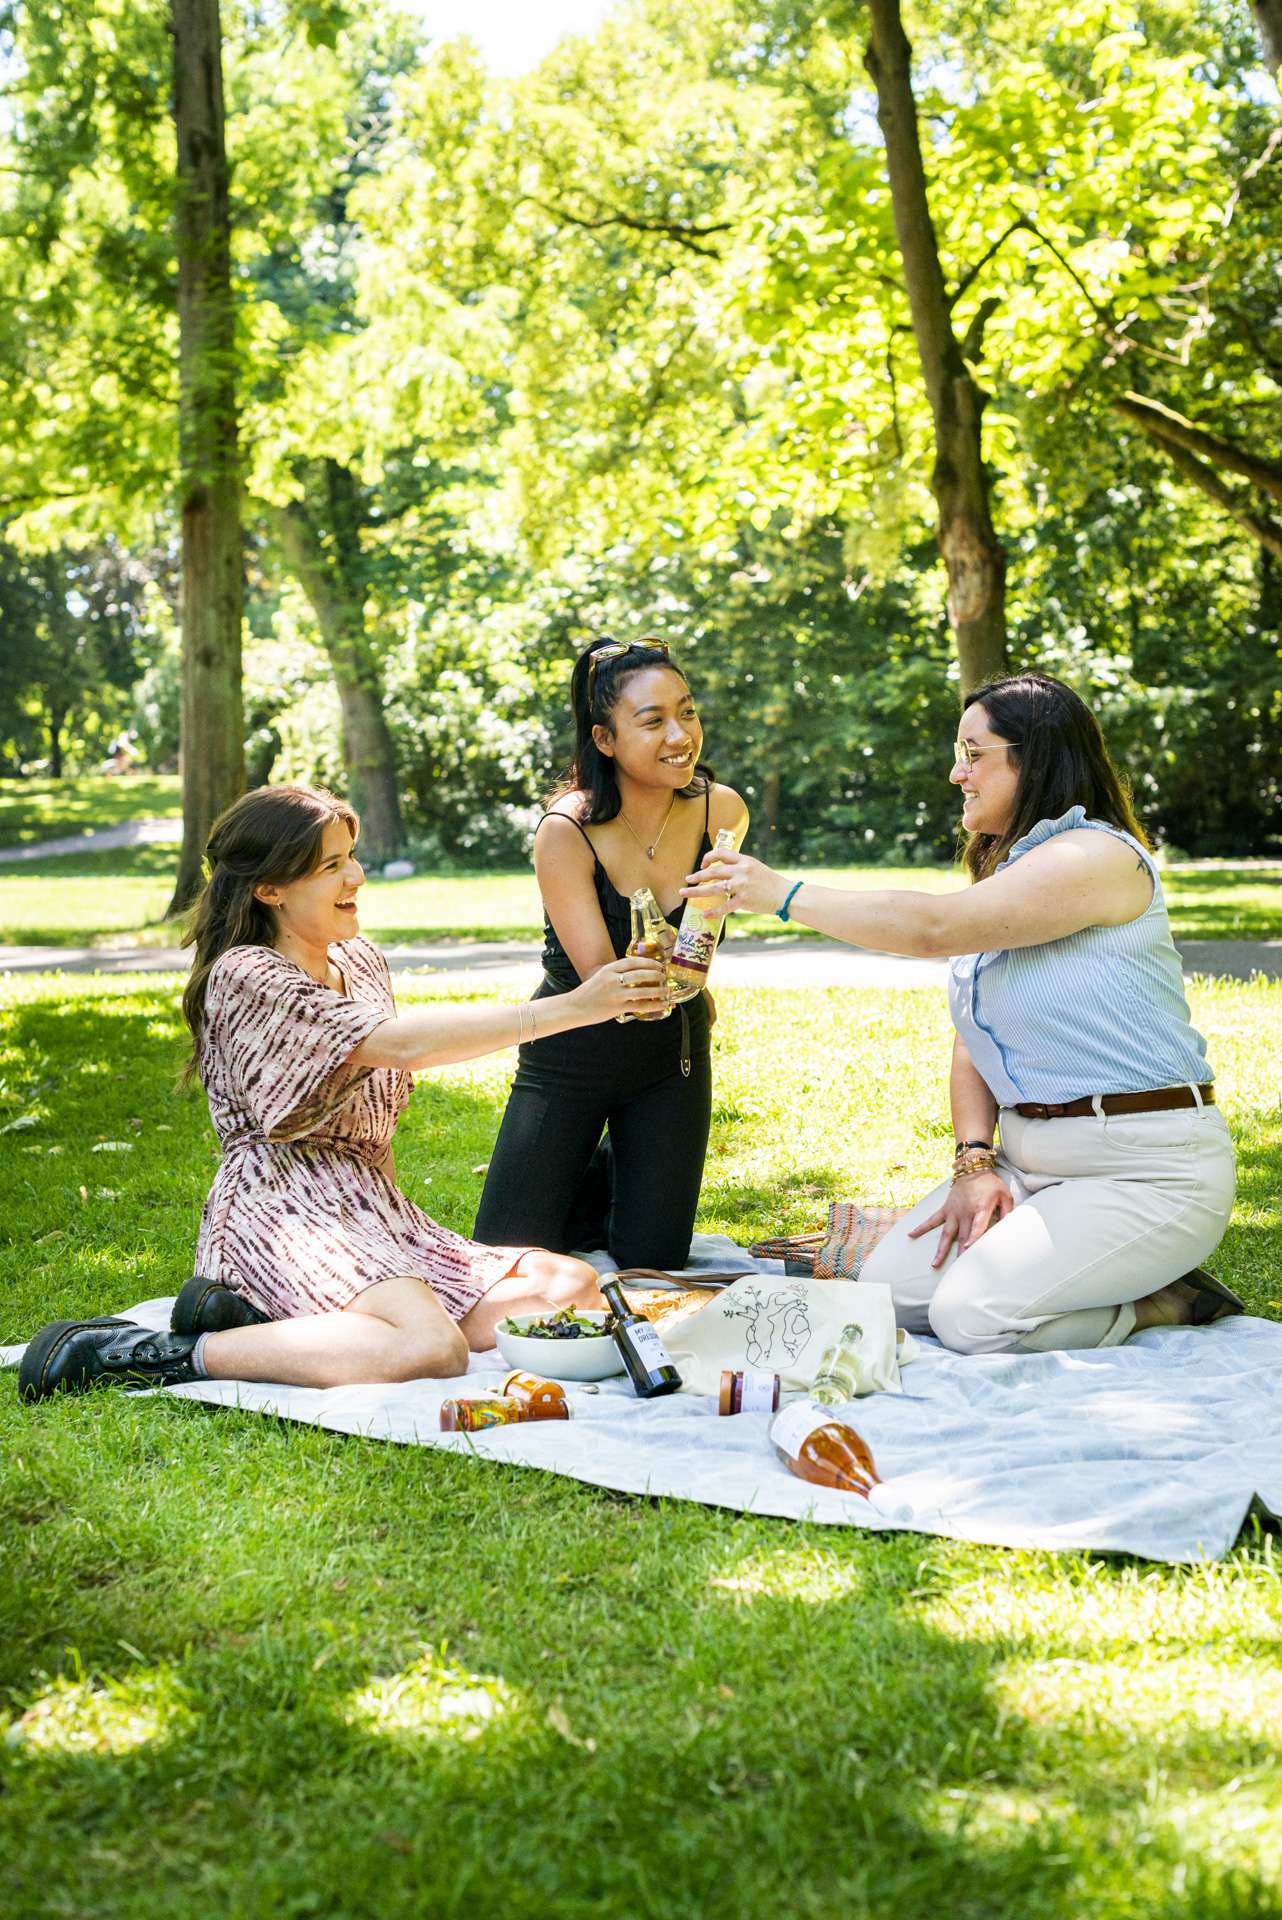 Picknick-Ausflug-in-den-Park_Cheers-mit-LiLamonade